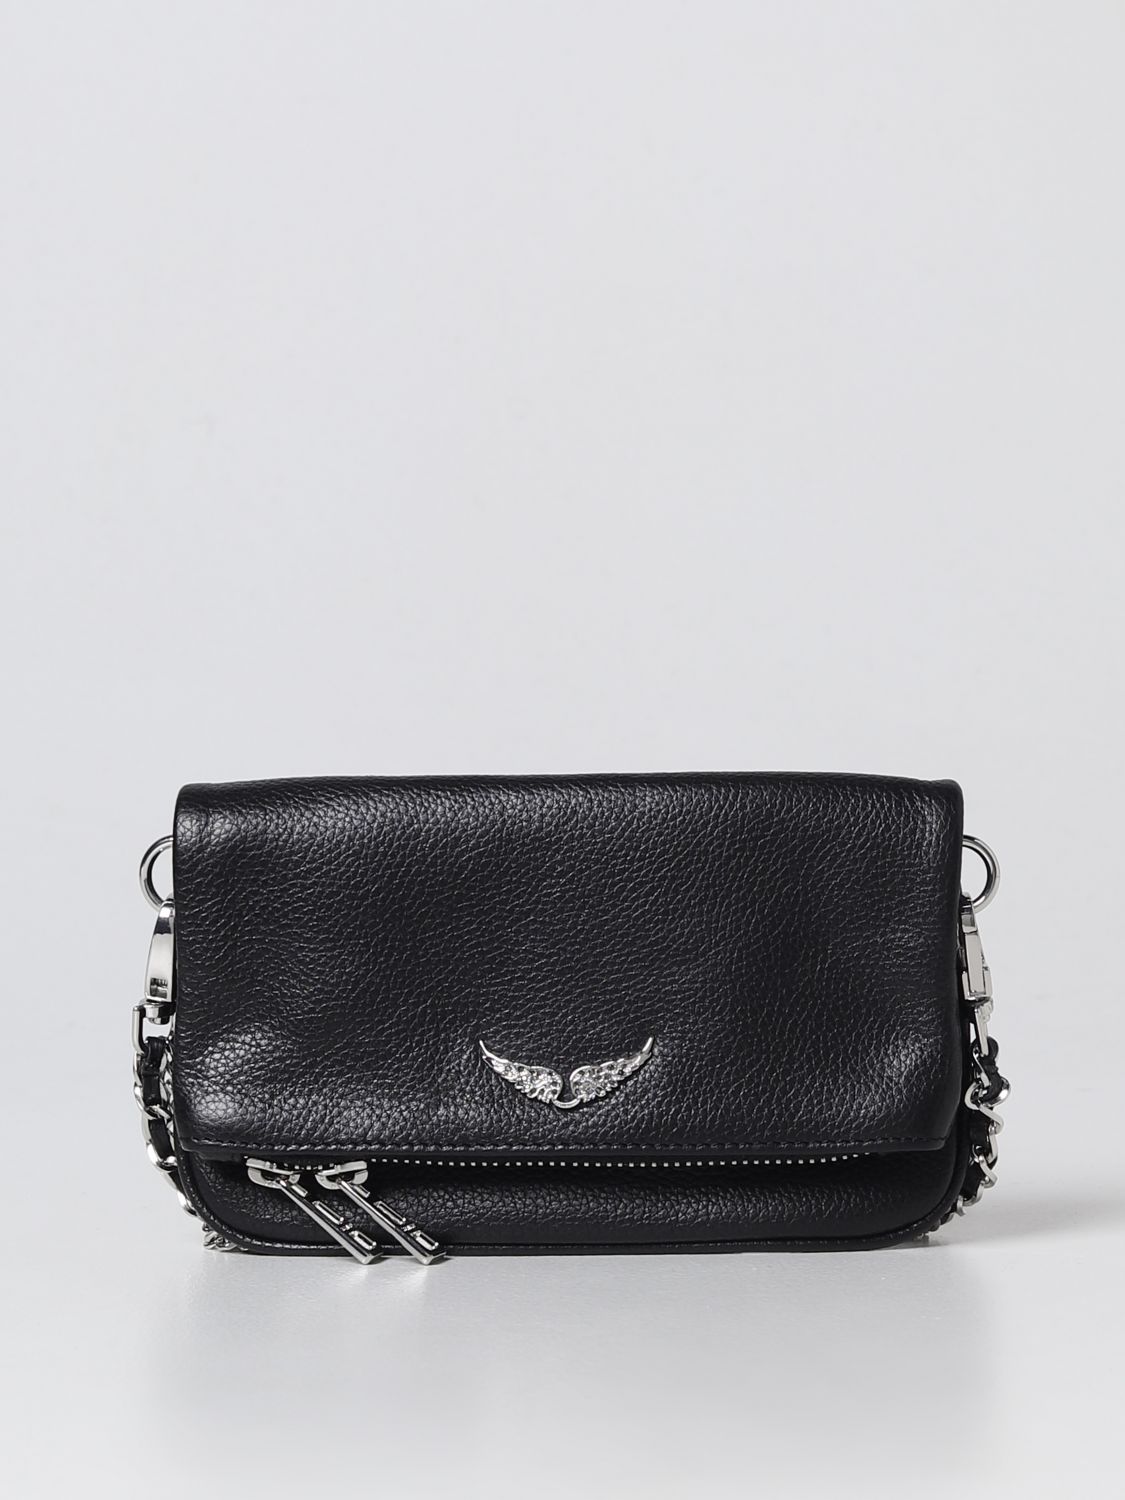 NWT Zadig & Voltaire Grained Leather Nano Rock Stud Clutch Crossbody  Handbag